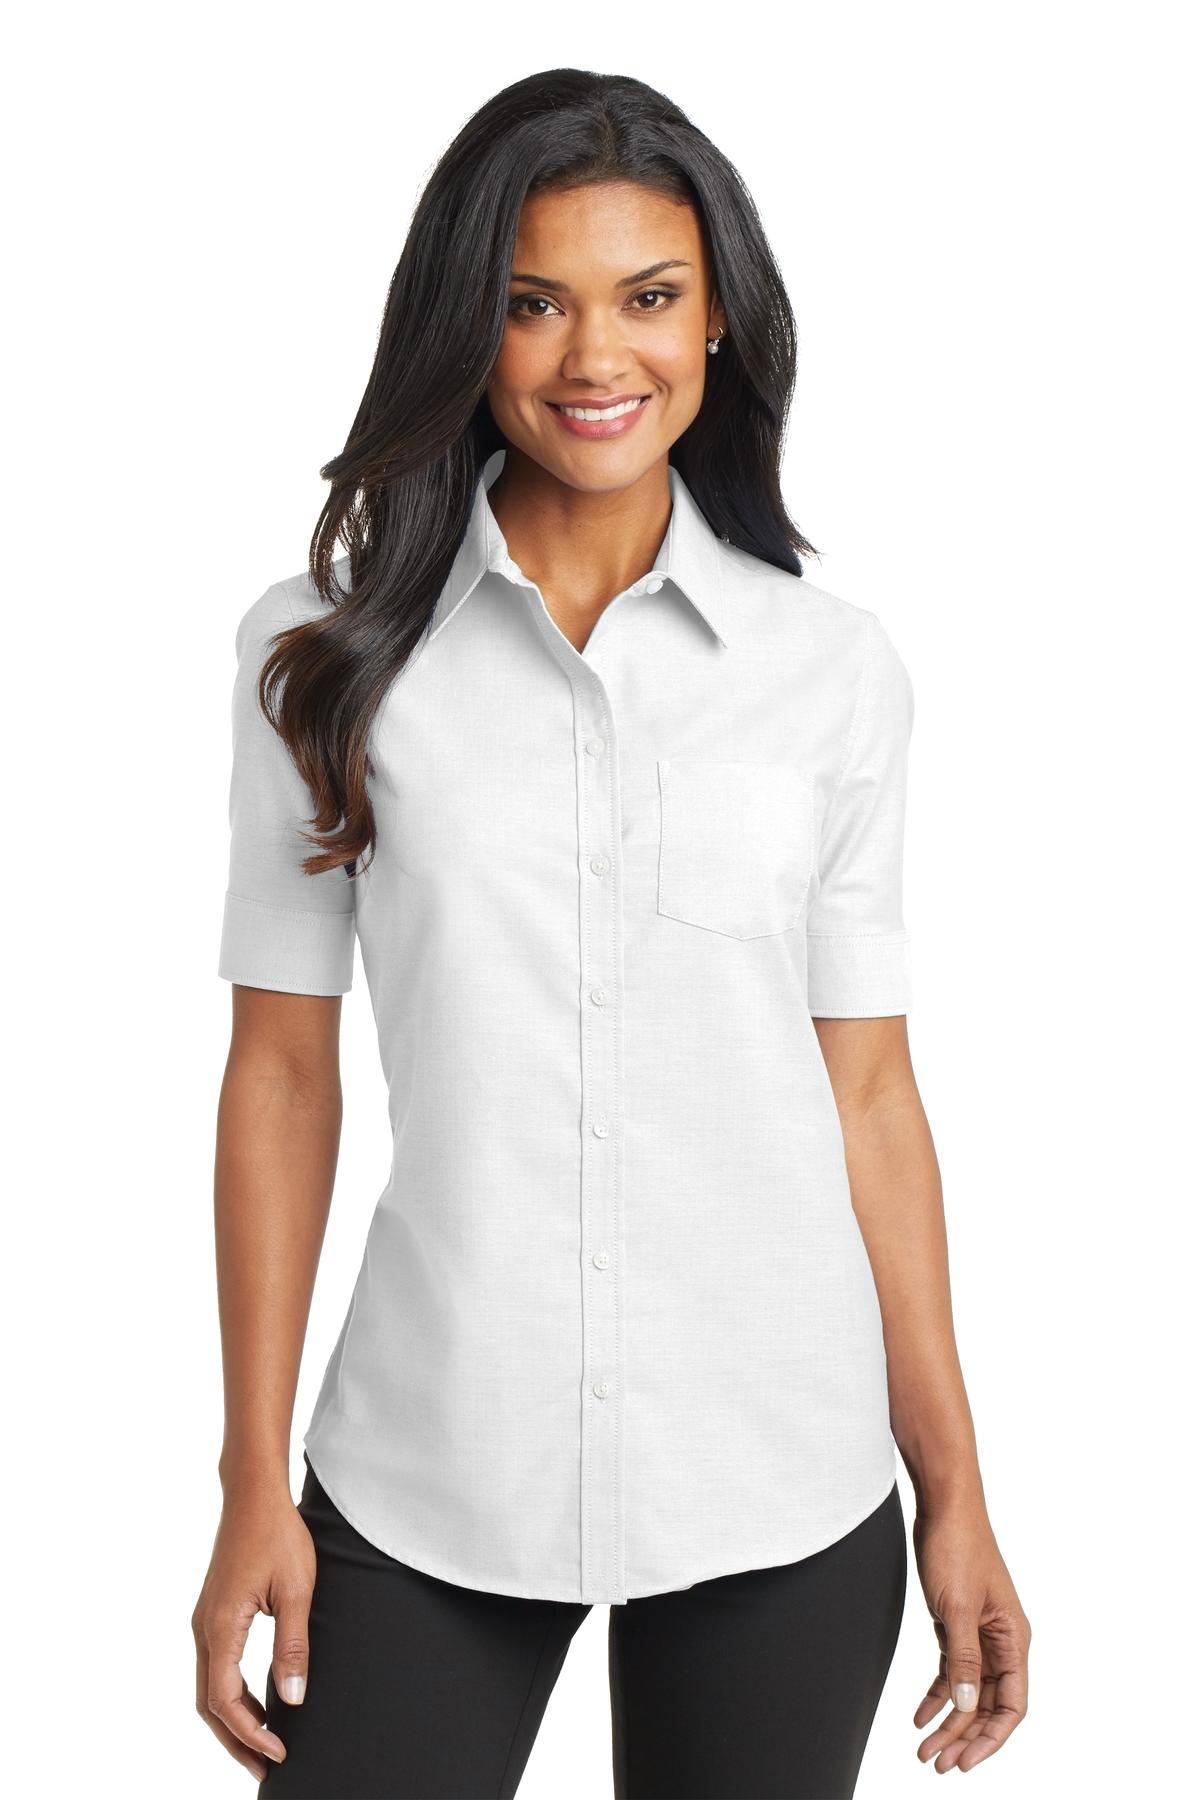 womens white dress shirt short sleeve